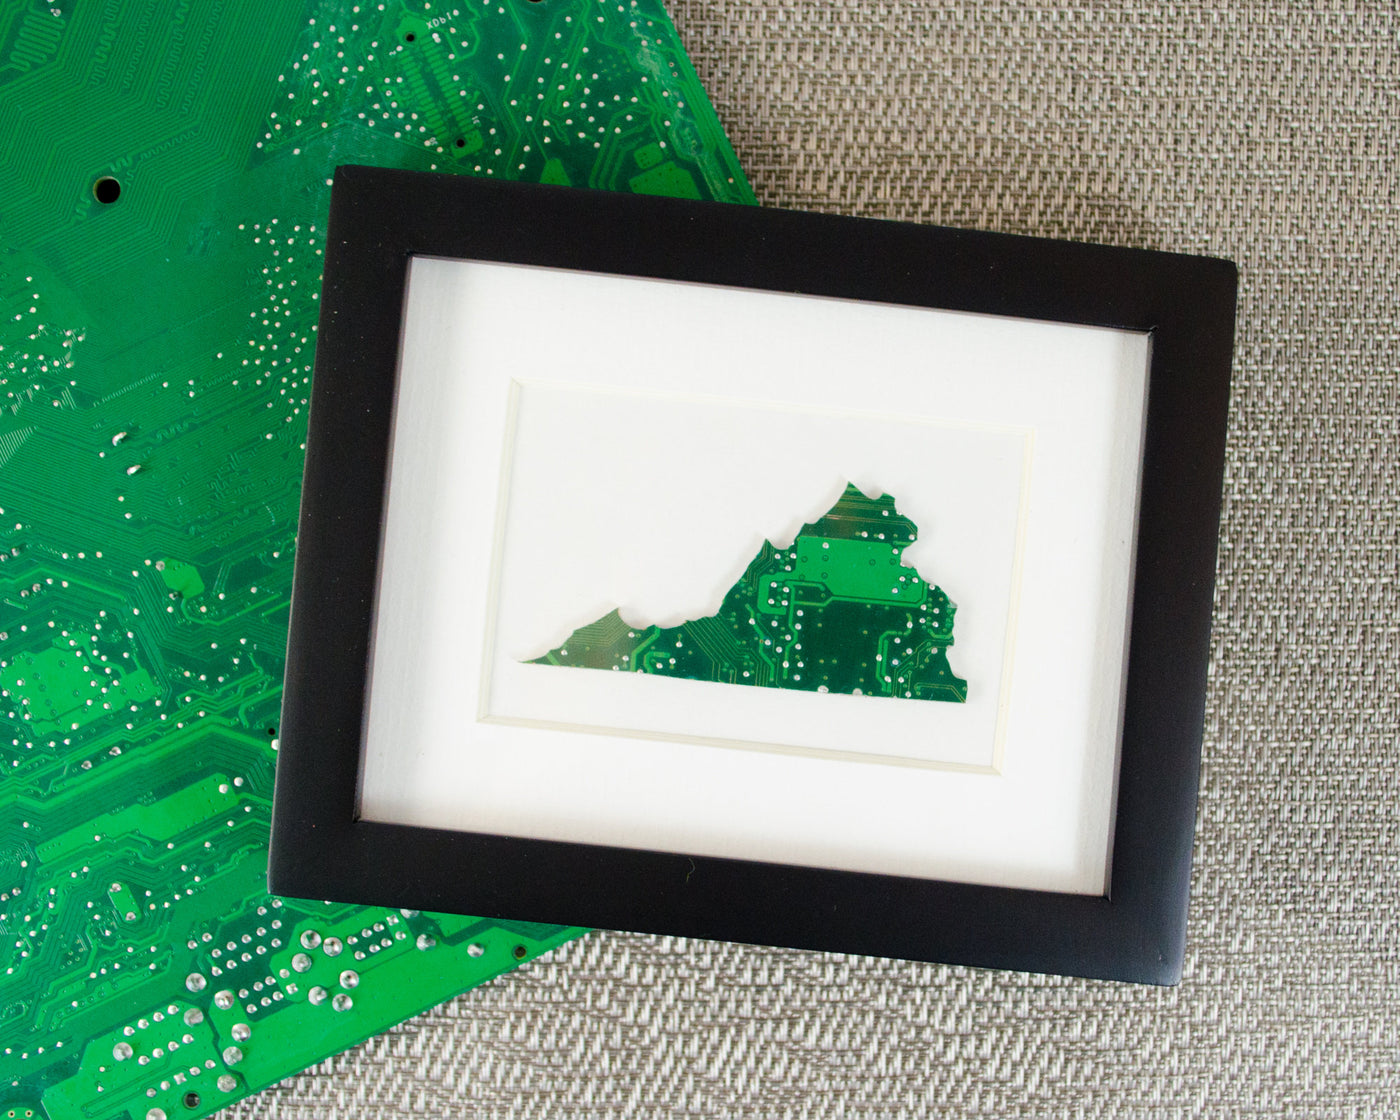 custom virginia mini framed art made from recycled circuit board